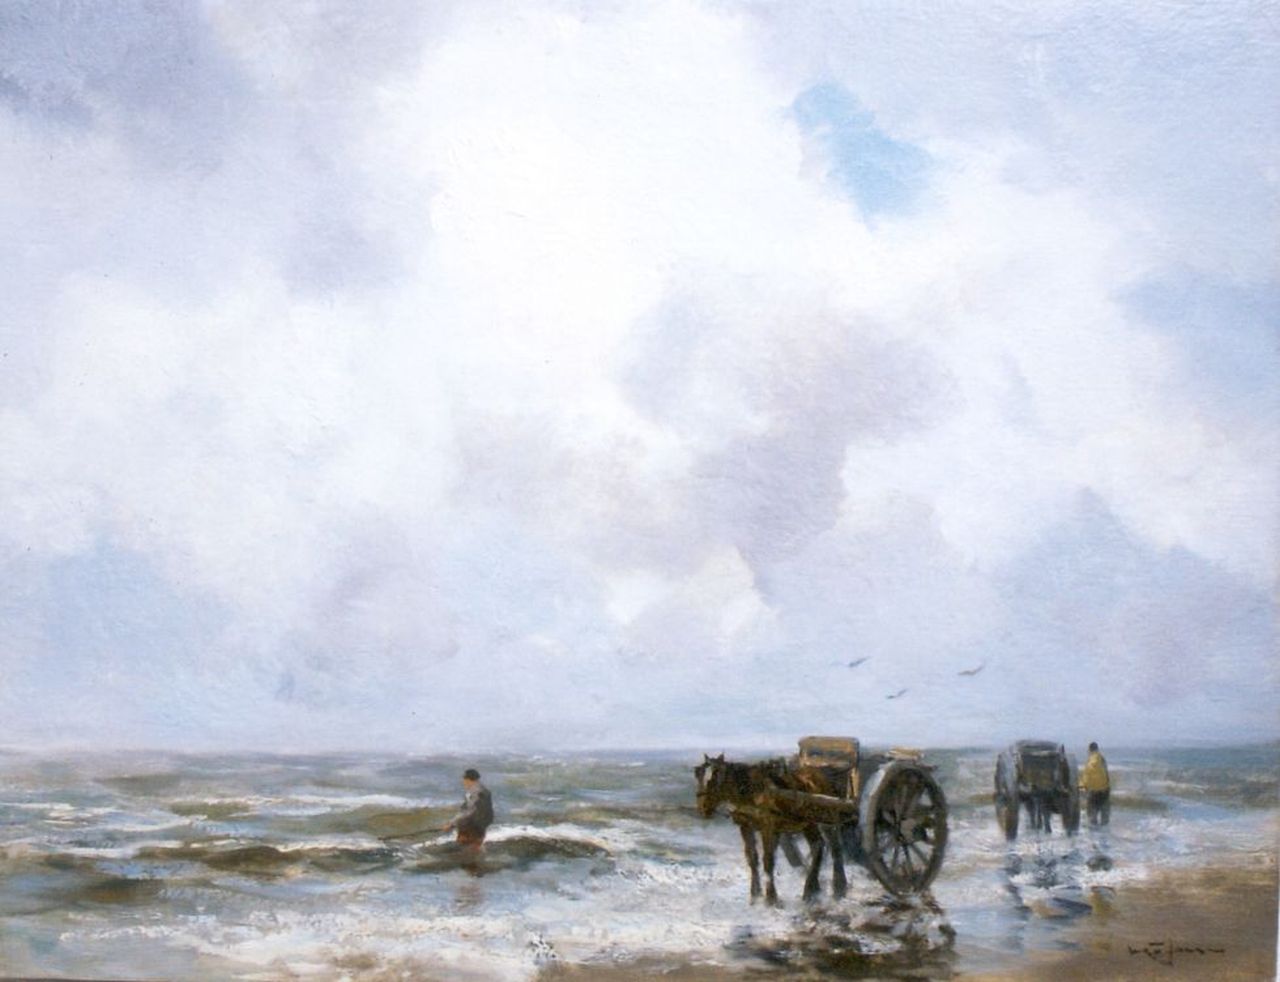 Jansen W.G.F.  | 'Willem' George Frederik Jansen, Schelpenvissers in de branding, olieverf op doek 50,1 x 65,5 cm, gesigneerd rechtsonder